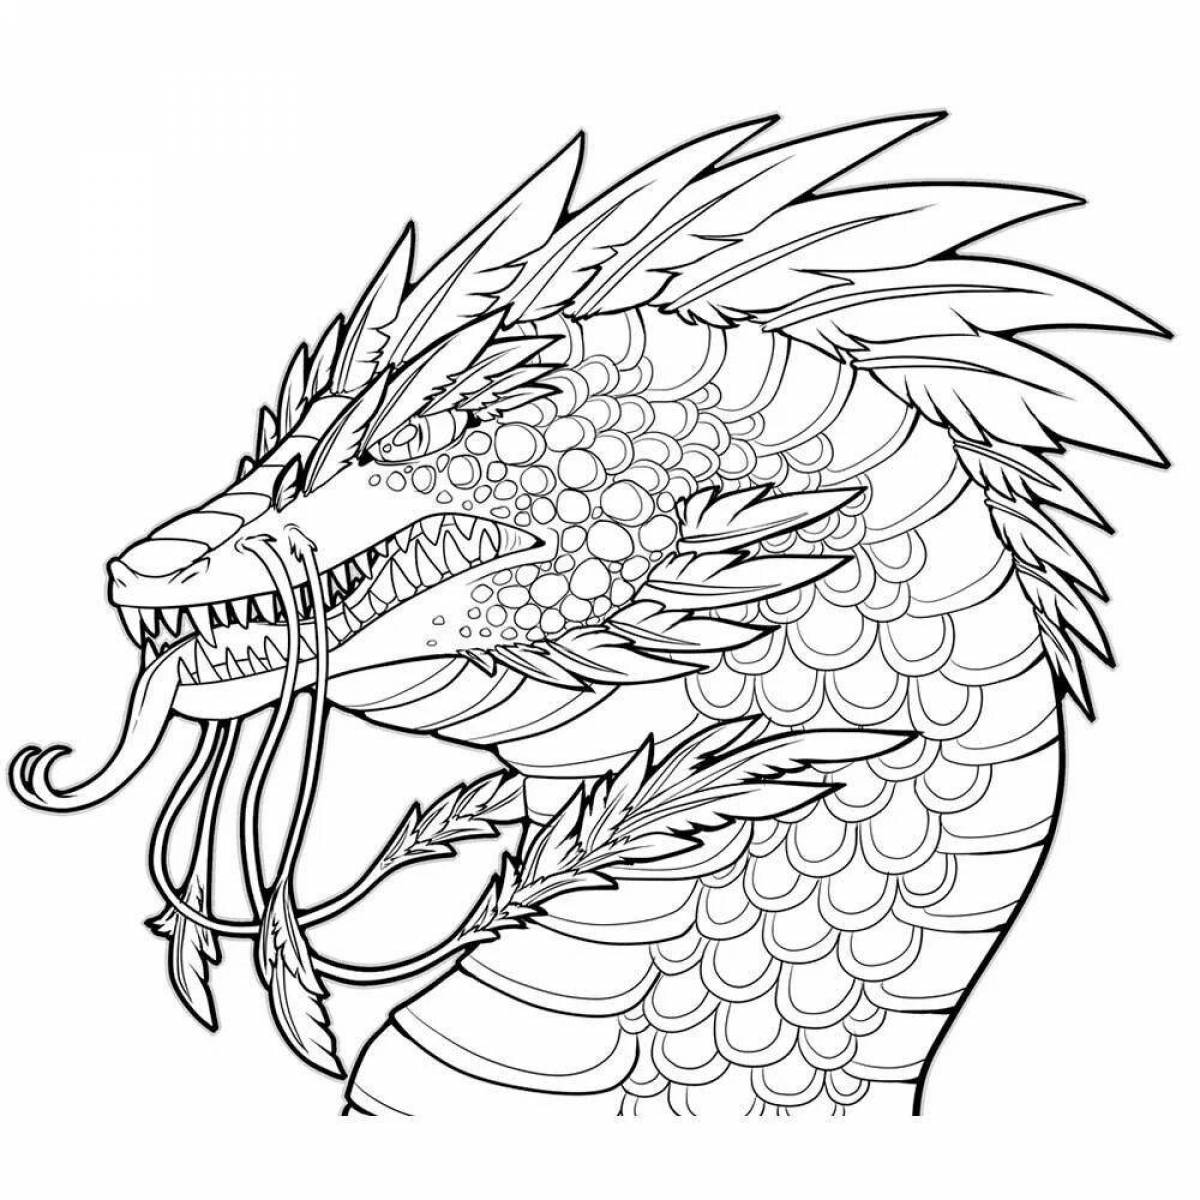 Difficult coloring complex dragon